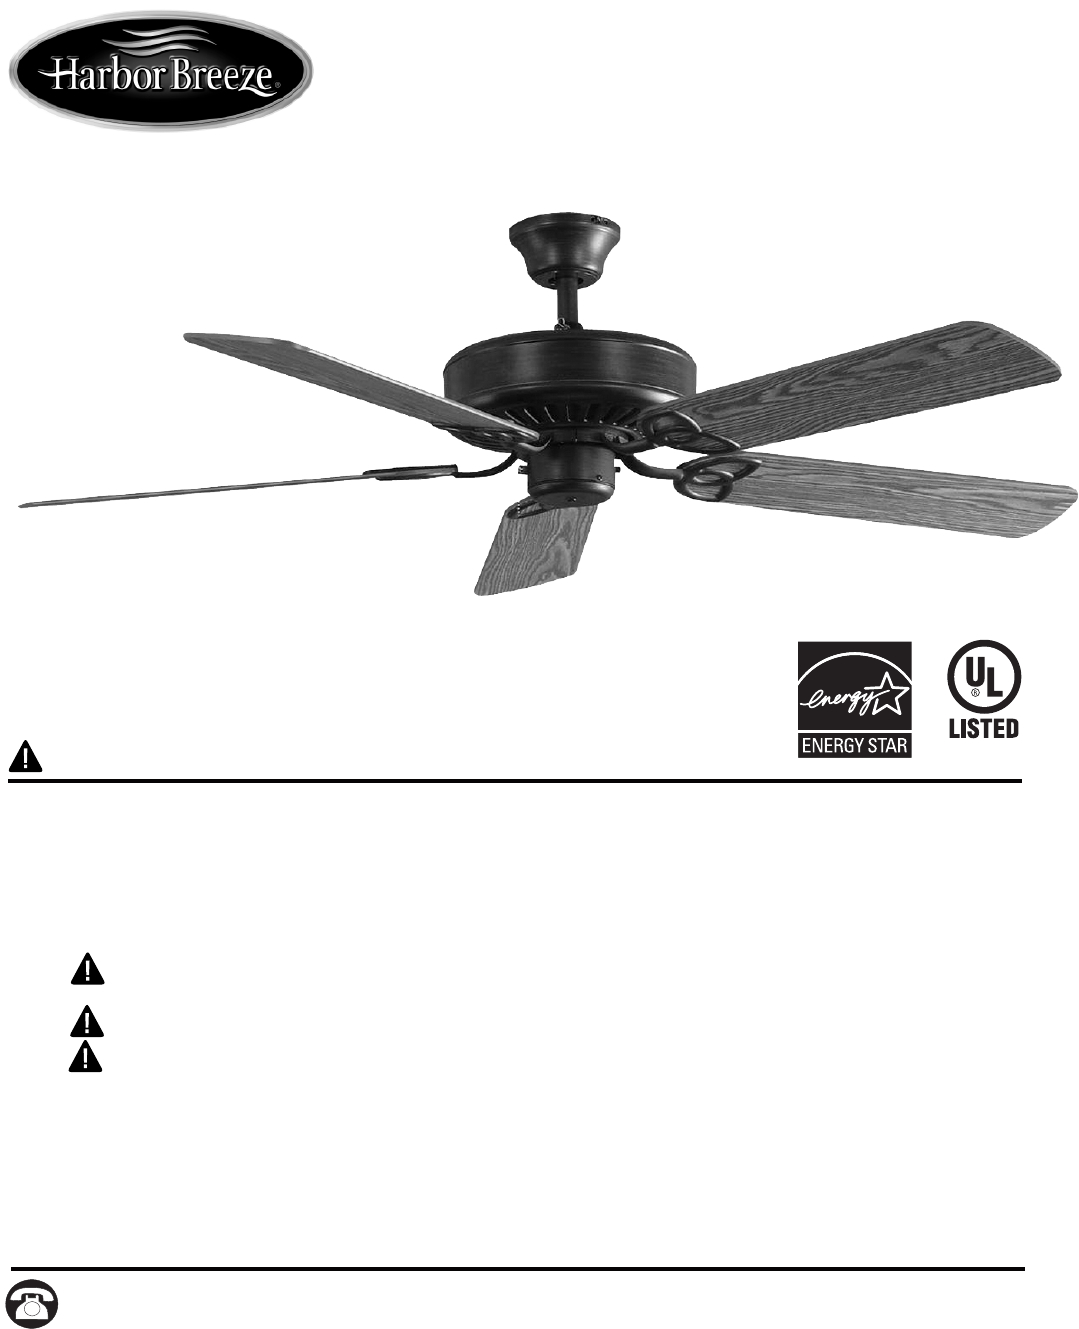 Harbor Breeze Ceiling Fan Manual Model Bdb52ww5p Pdf within proportions 1079 X 1329